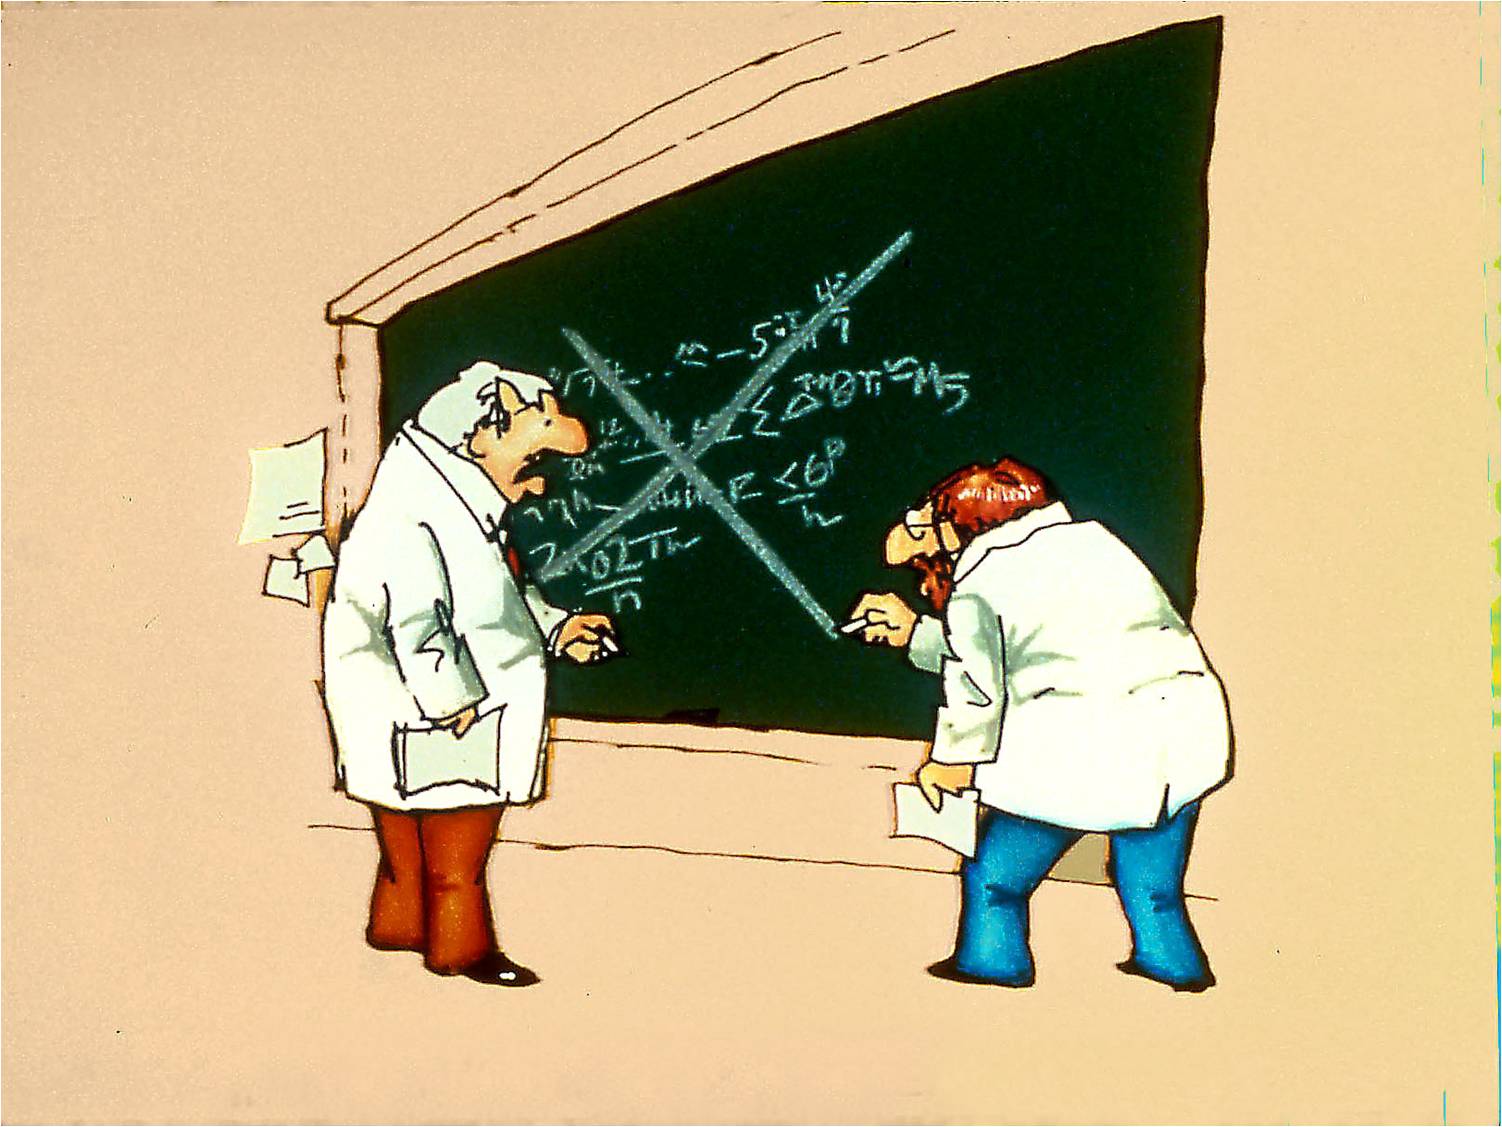 A professor carefully marks a giant X through a colleague's work on a chalkboard.